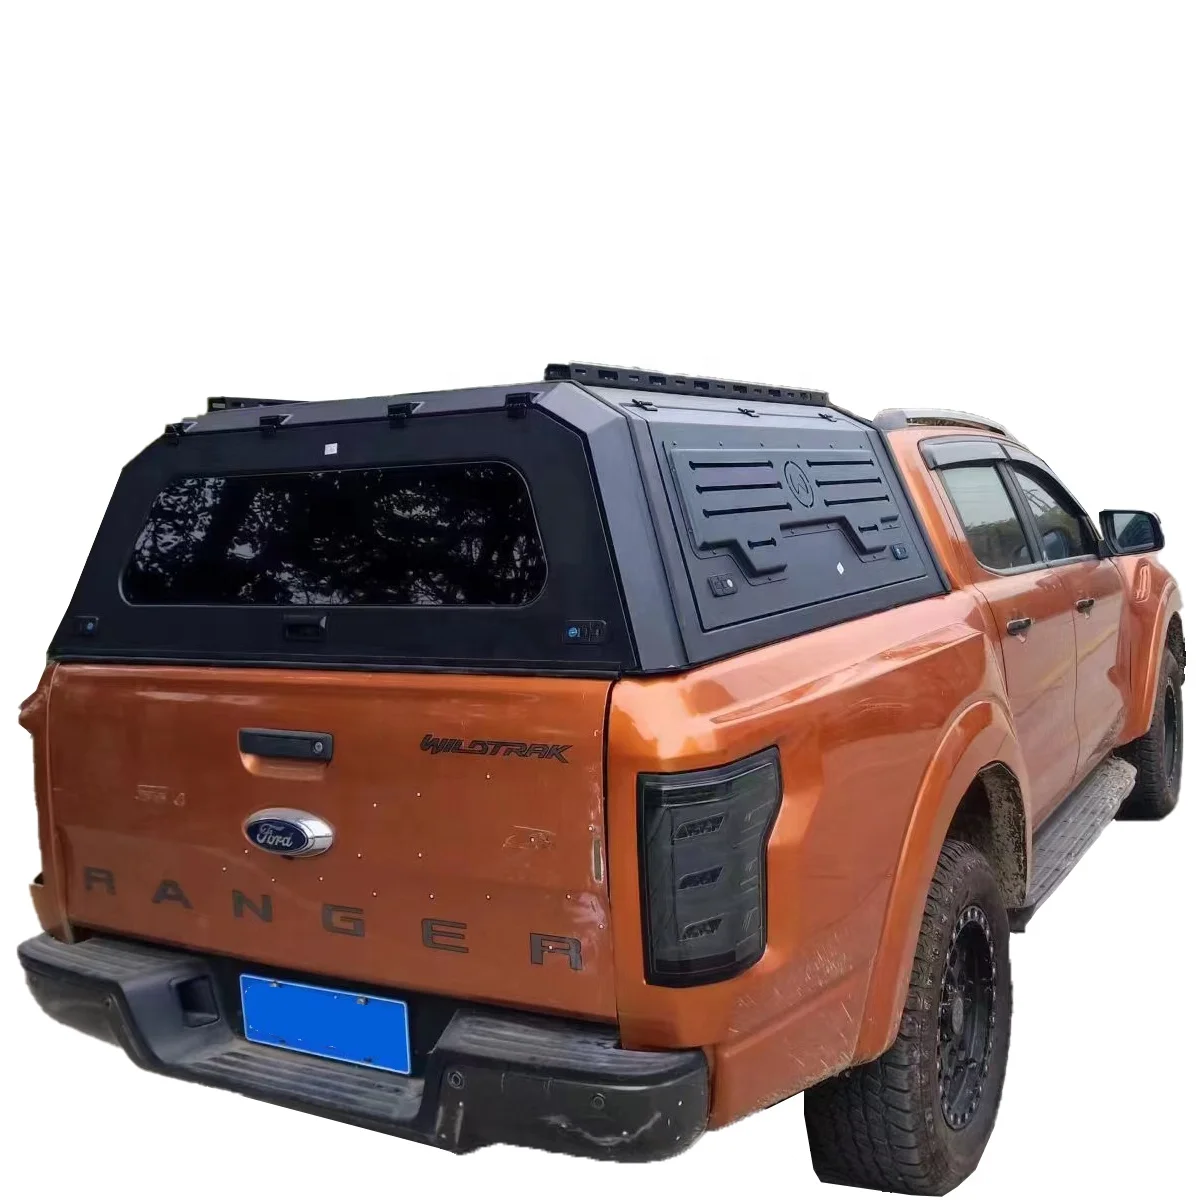 Newest Off road Truck Topcap Smartcap For Pickups F150 Ranger Tundra Tacoma Silverado Ram Maverick gladiator smartcap canopy (1600693912915)